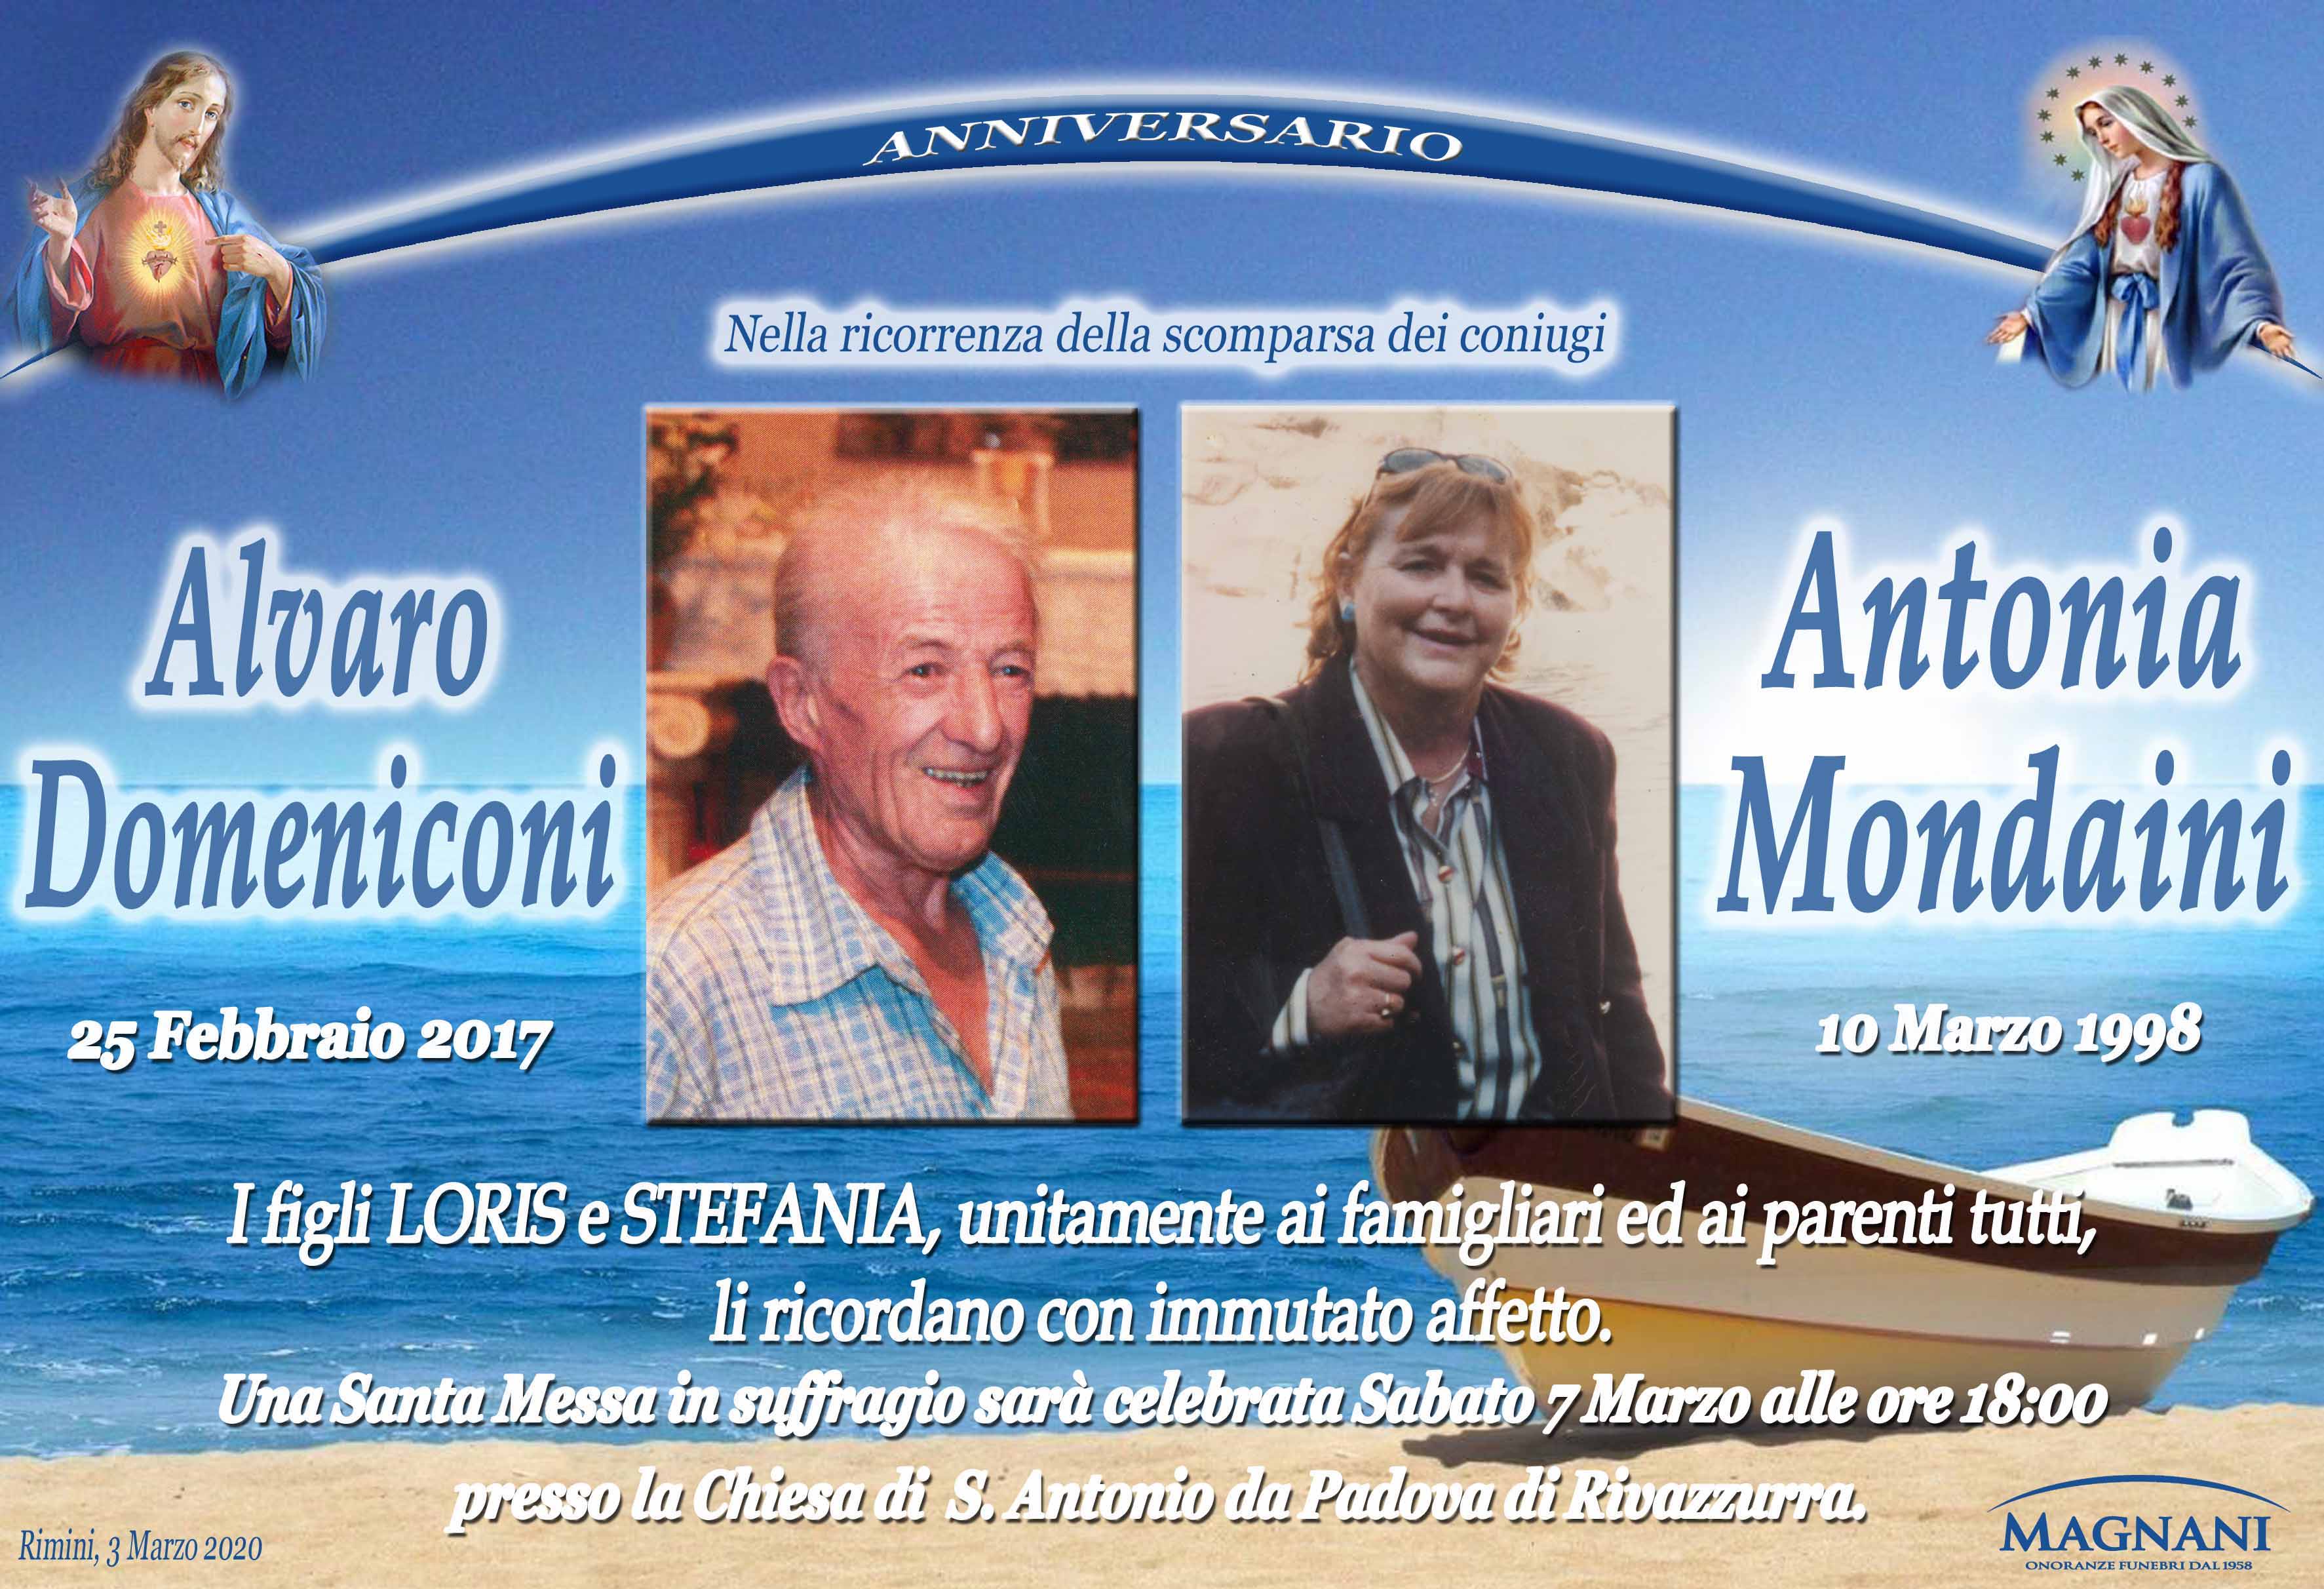 Coniugi Alvaro Domeniconi e Antonia Mondaini